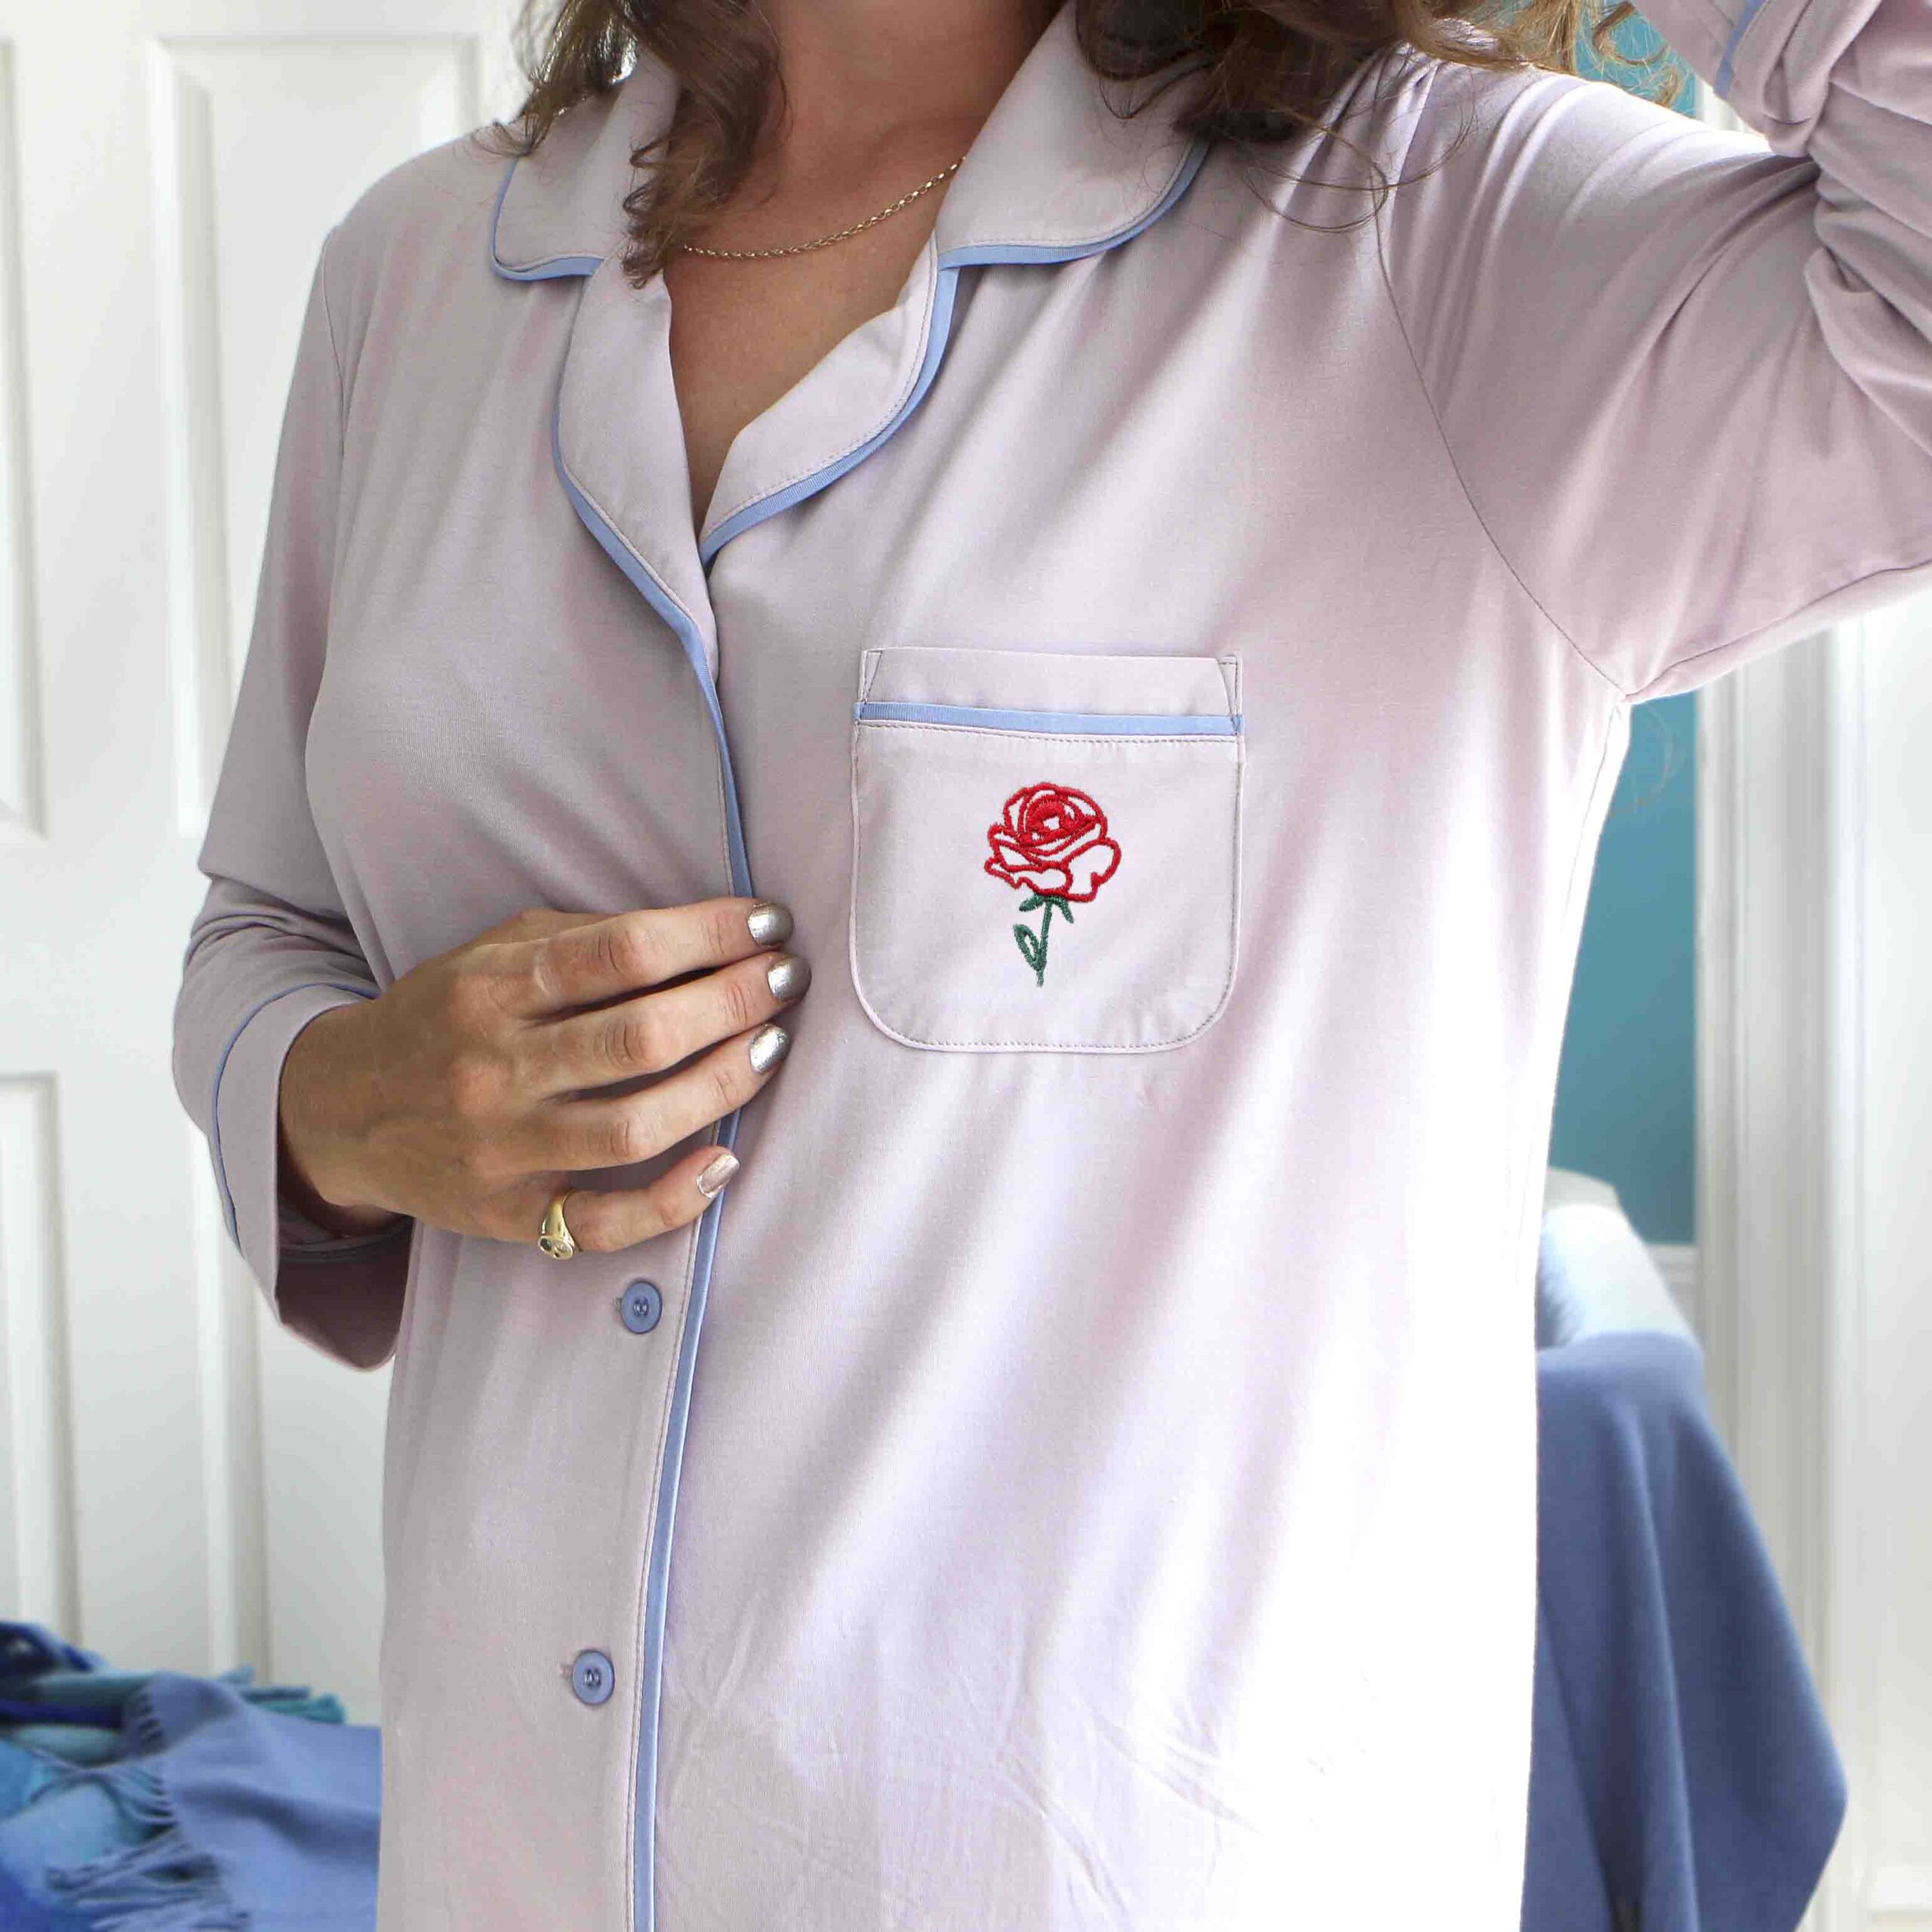 StephieAnn_Birth Flower Rose Pyjamas_£59